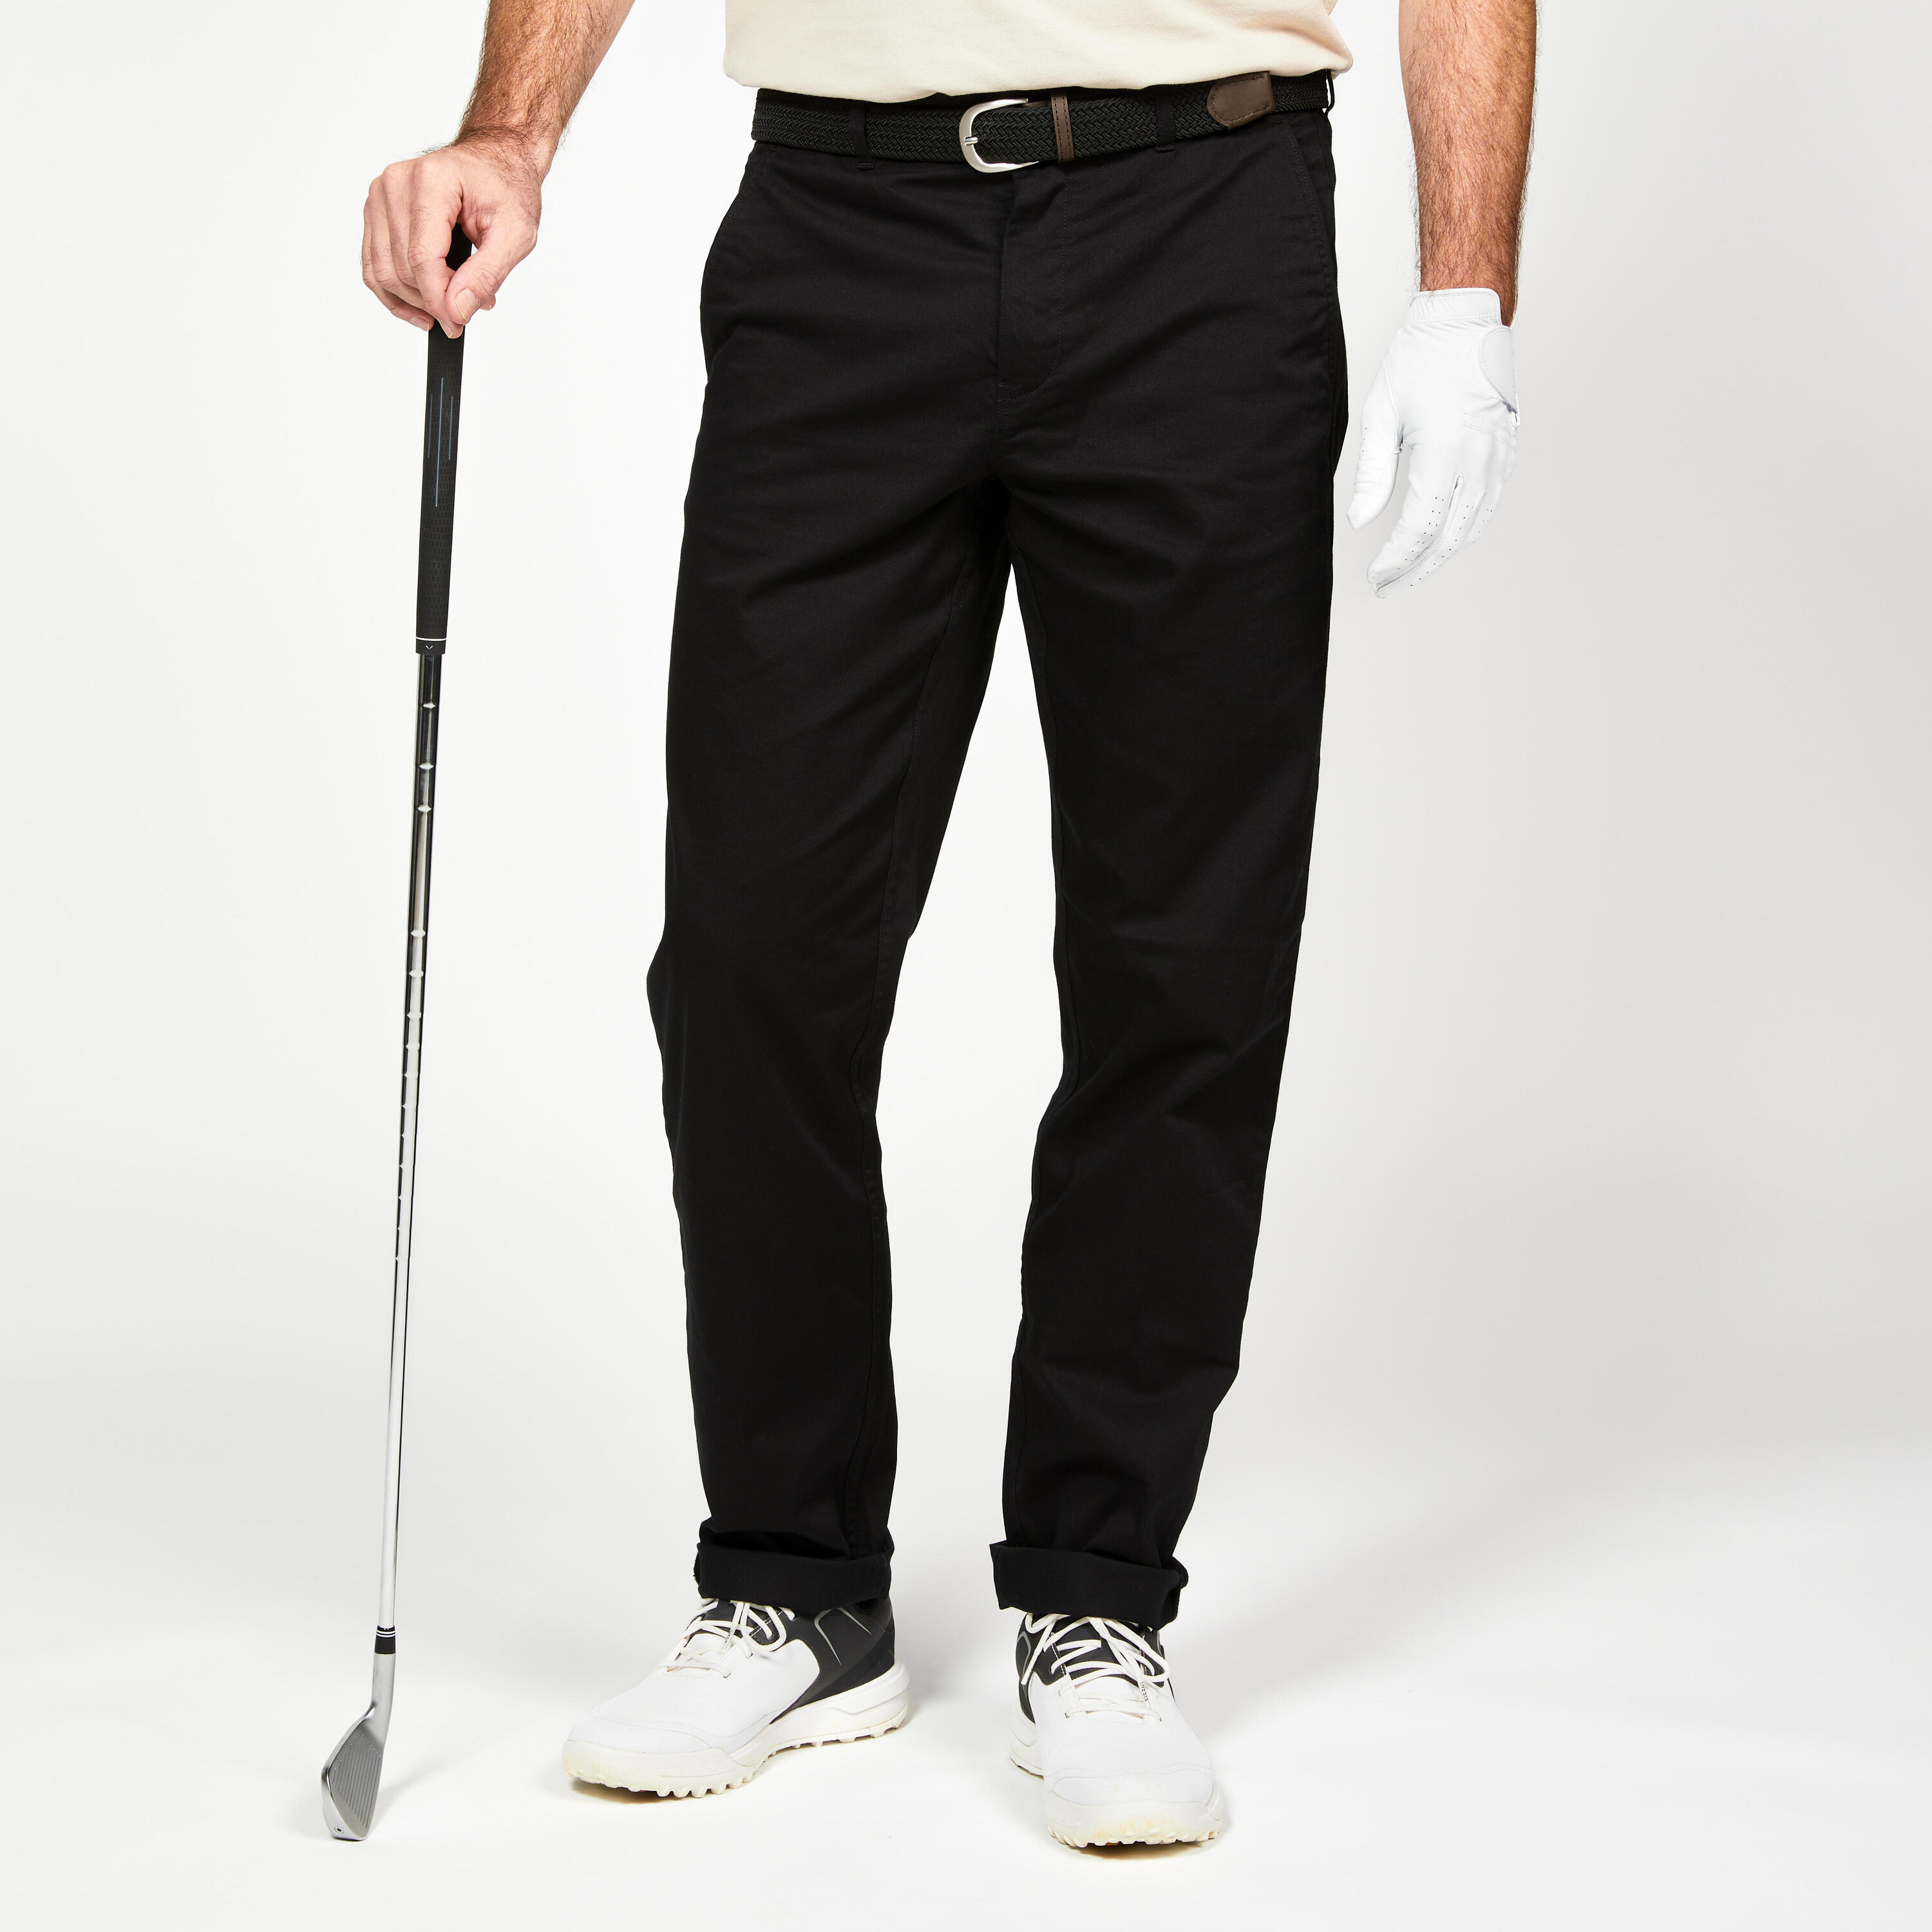 Men's Golf Chino Trousers Cotton - MW500 Black 1/4